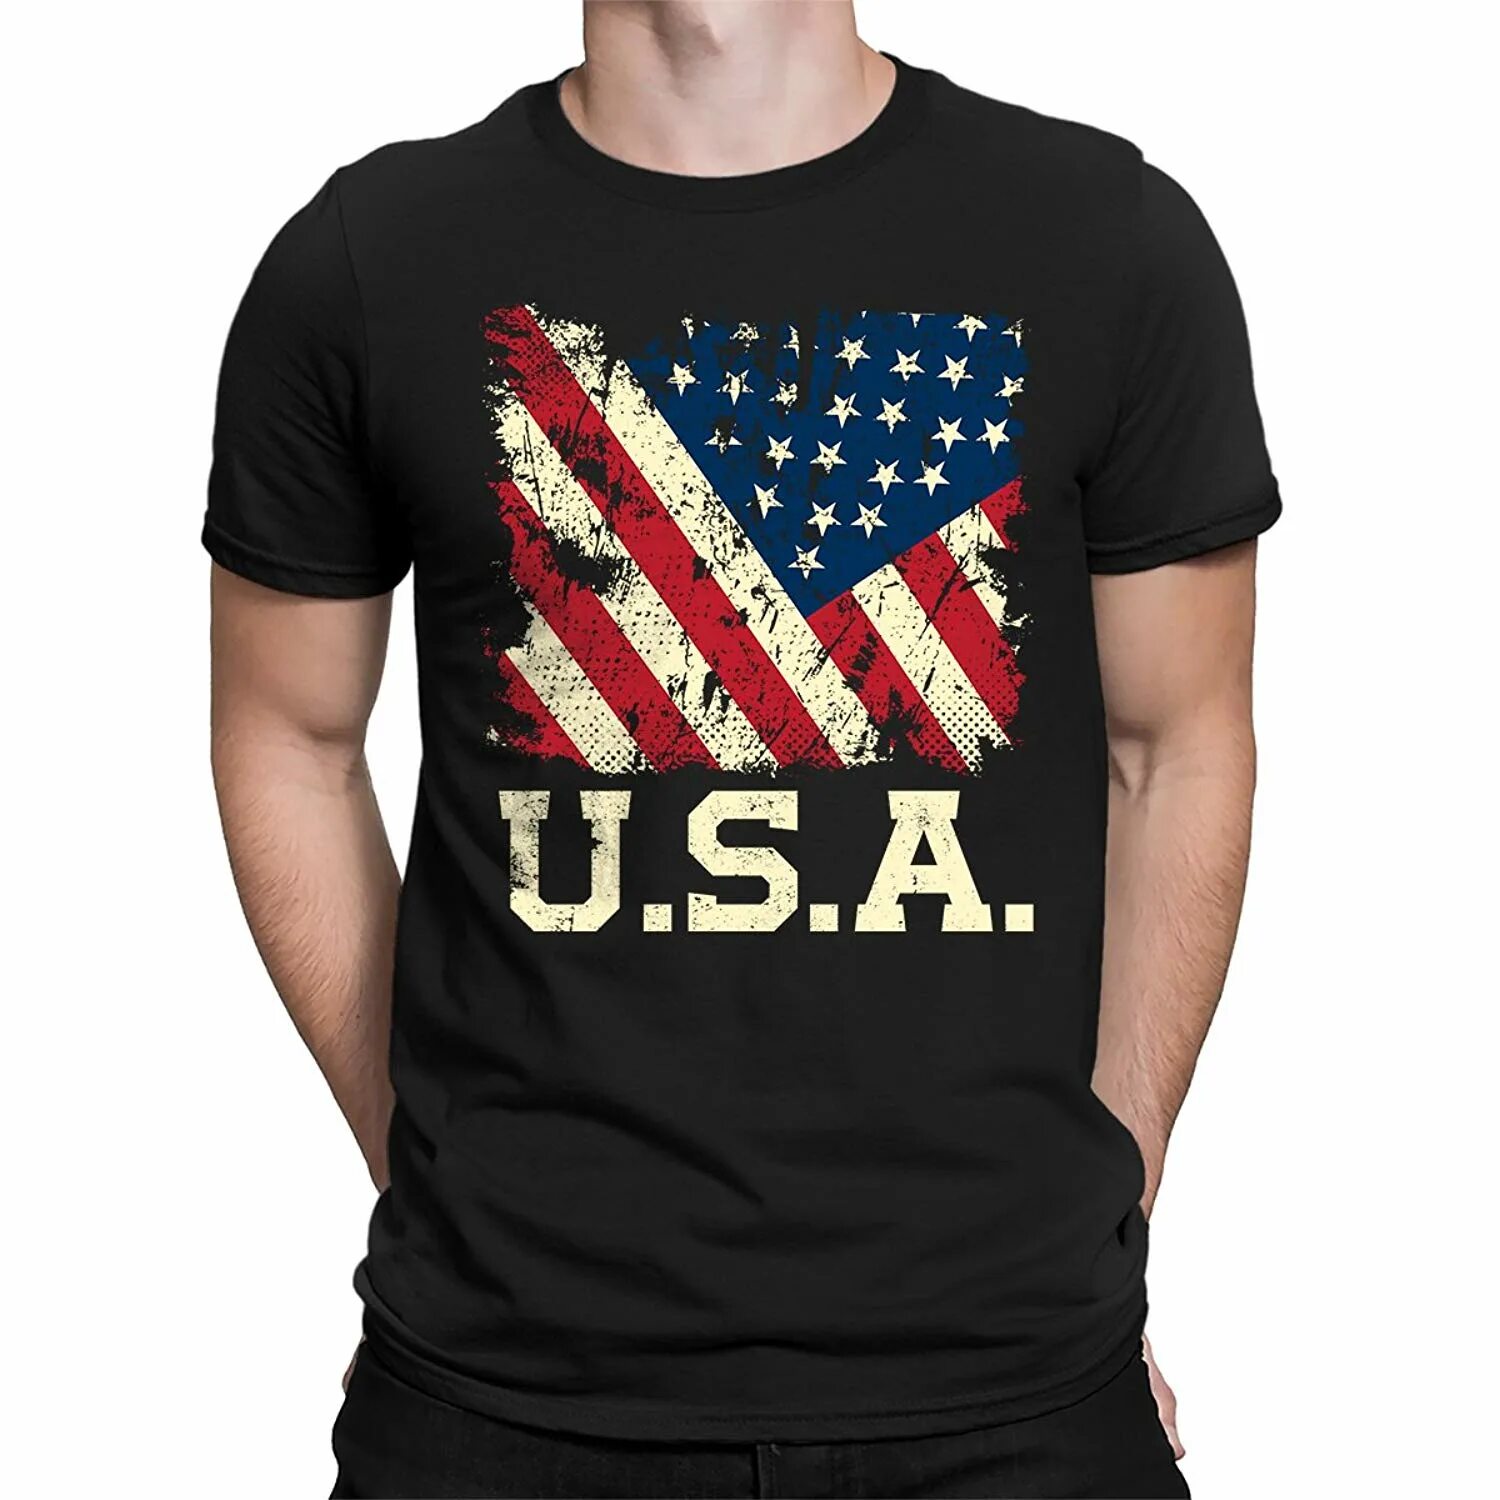 Американские надписи на футболках. Футболка с американским флагом. Майки американские мужские. Футболка с надписью USA.